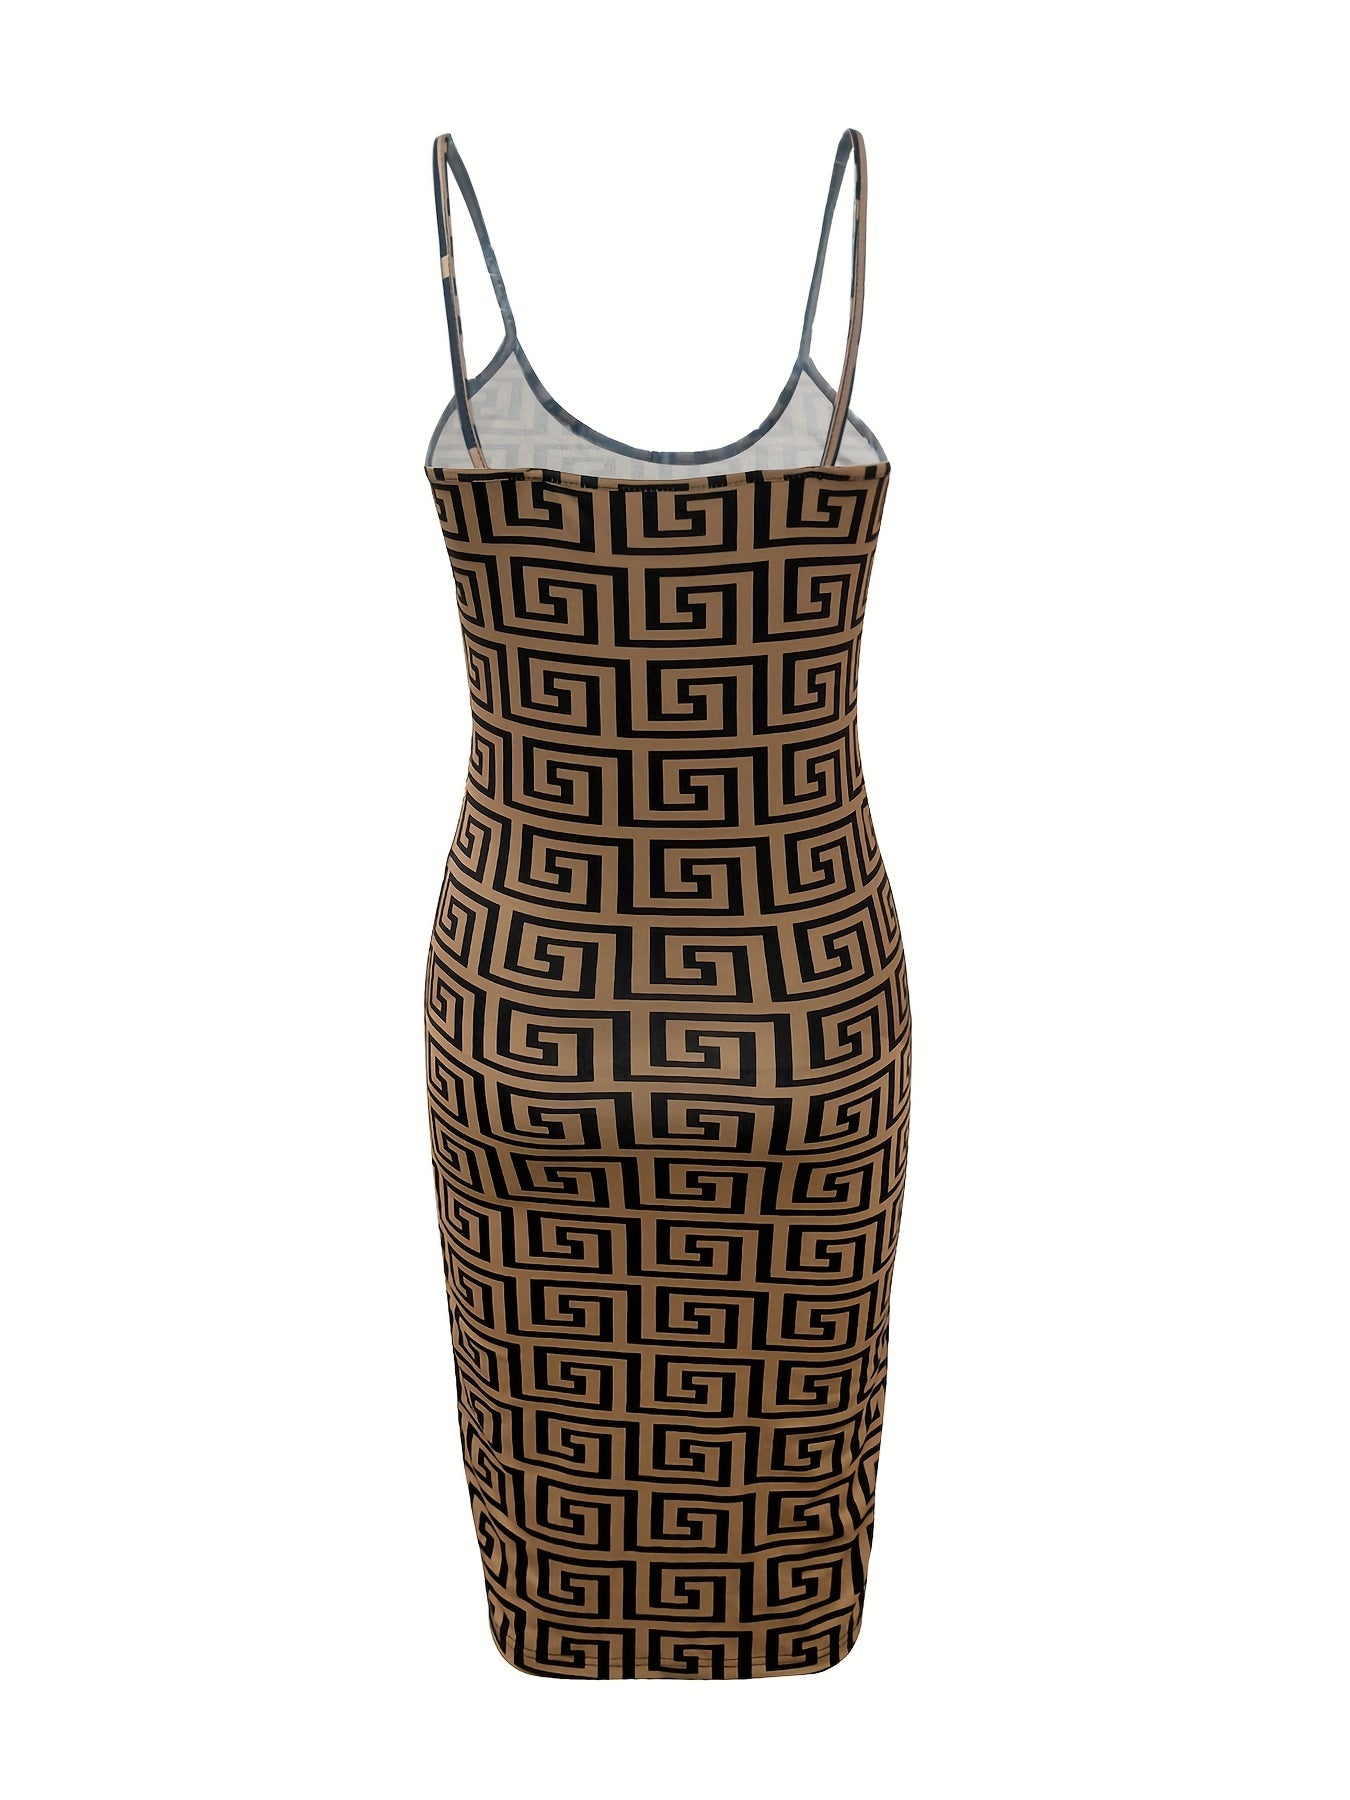 Antmvs Allover Print Backless Dress, Sexy Spaghetti Strap Bodycon Dress, Women's Clothing